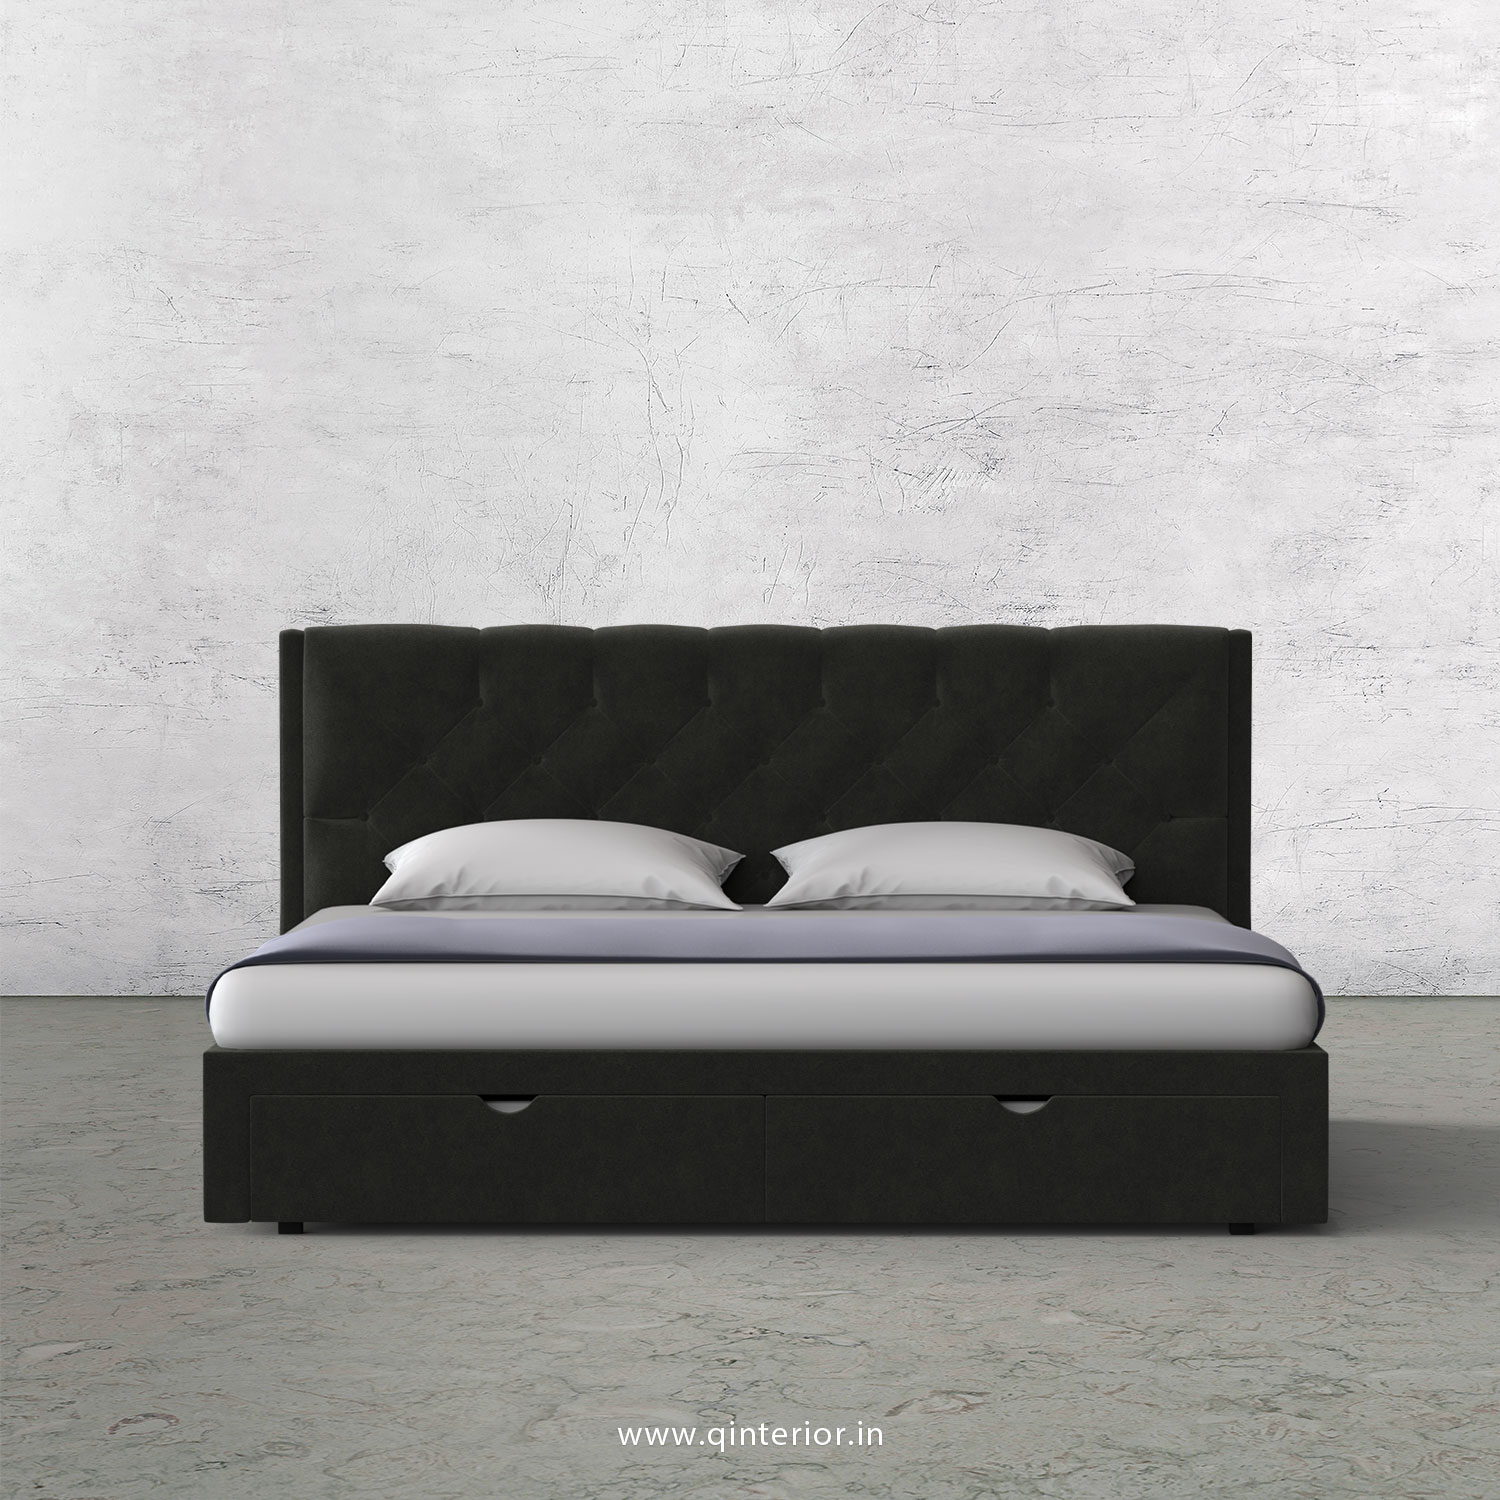 Scorpius King Size Storage Bed in Velvet Fabric - KBD001 VL15